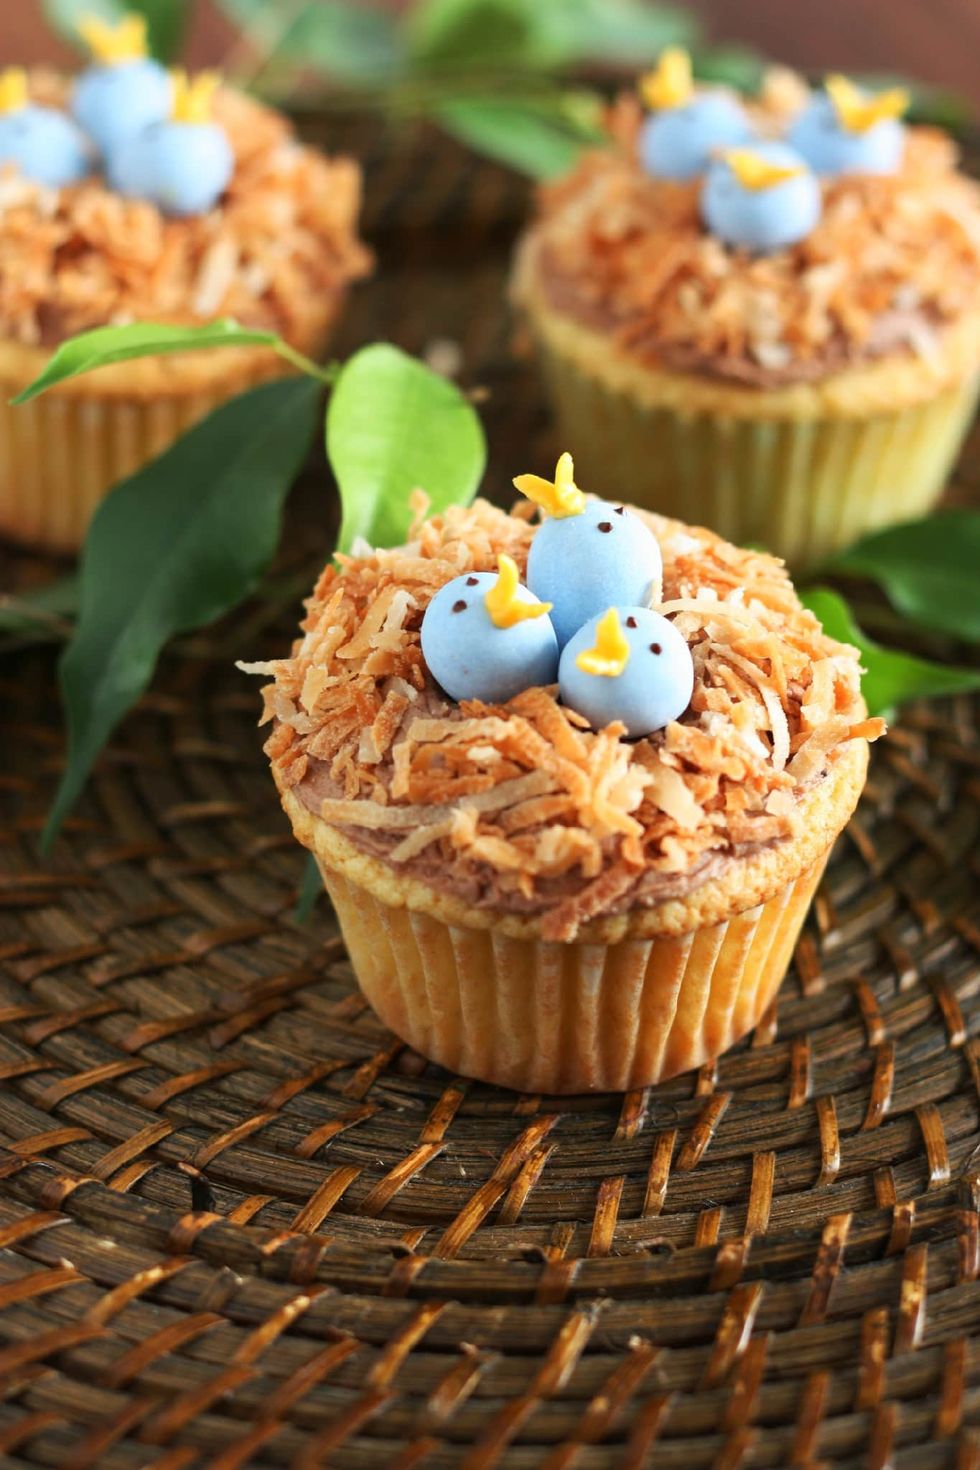 Bird's Nest Cupcakes